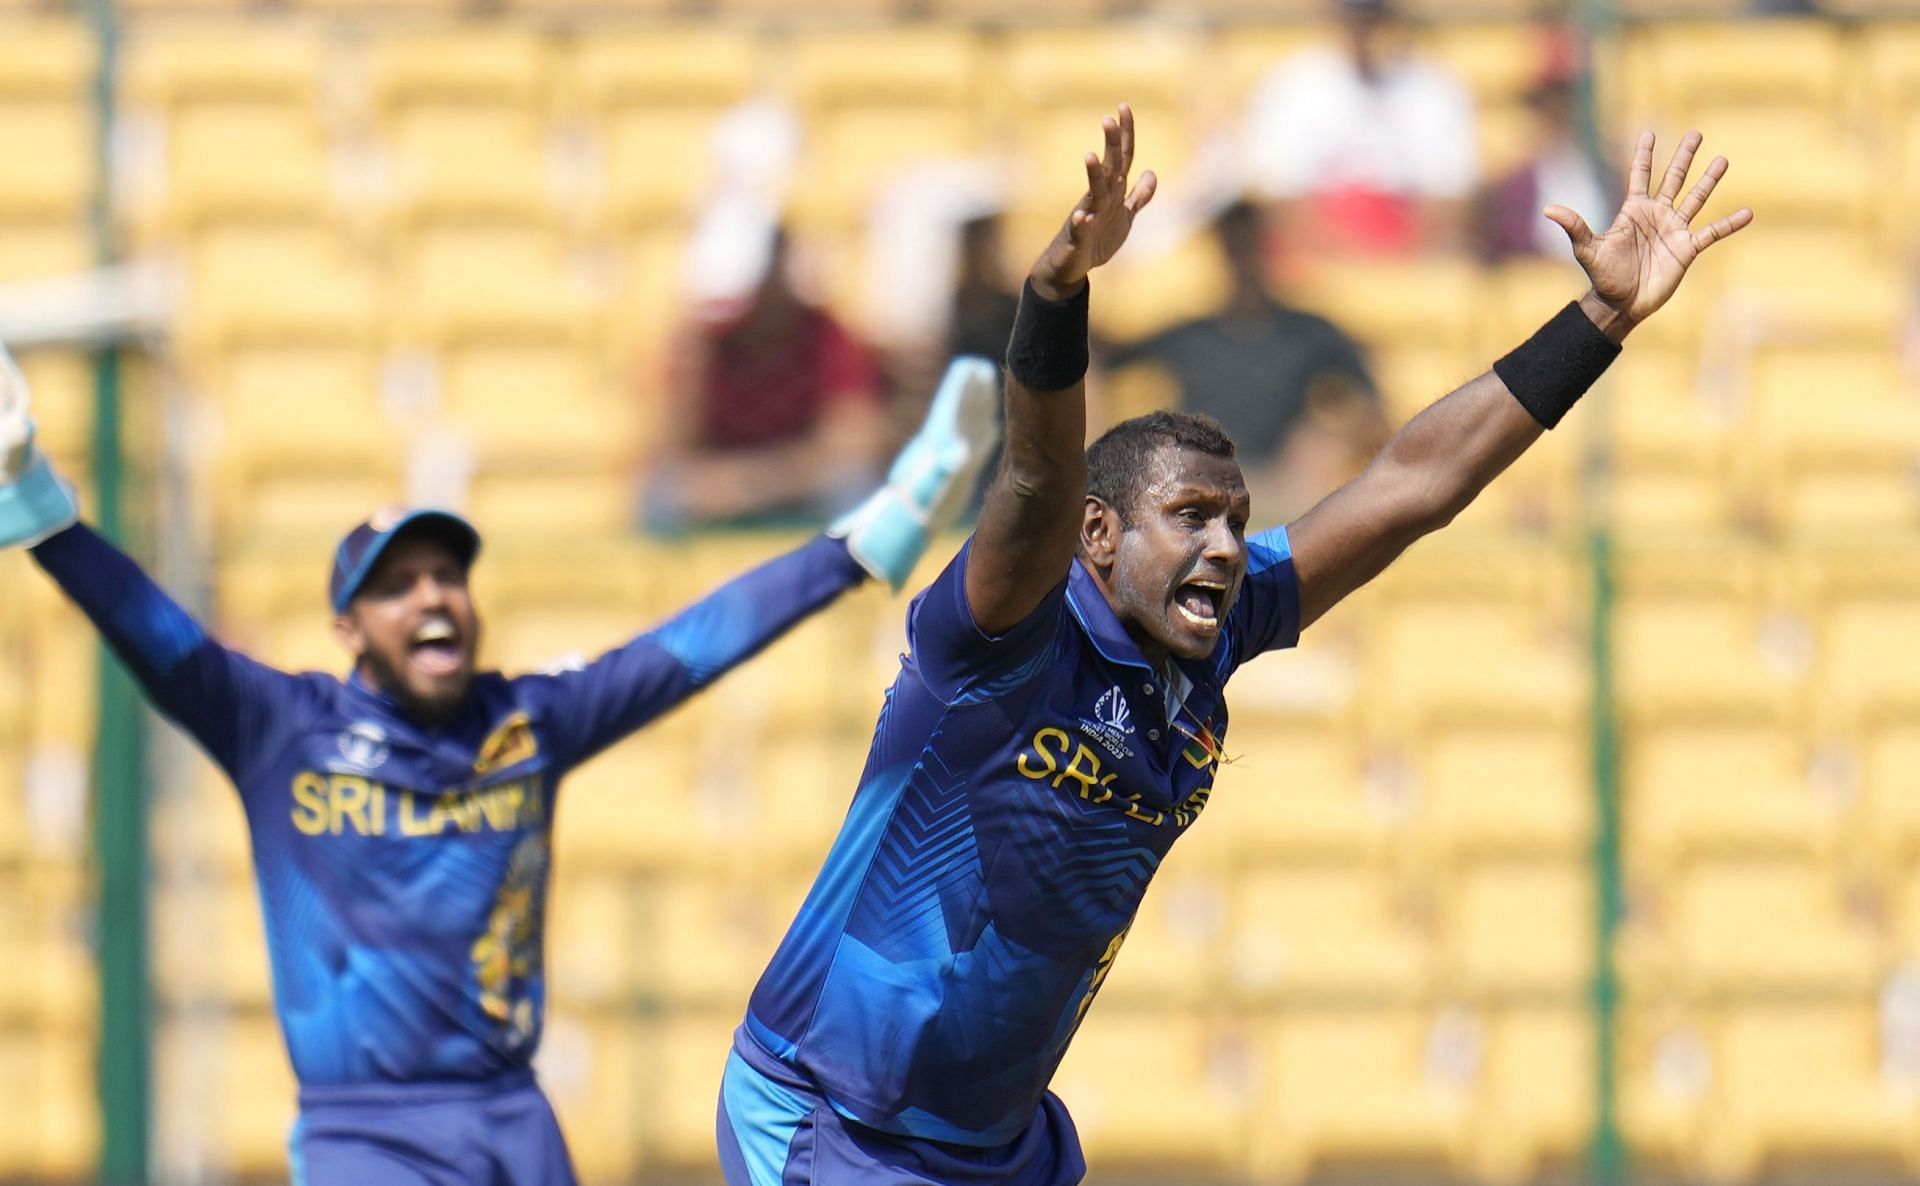 Angelo Mathews has been batting at No. 7 for Sri Lanka